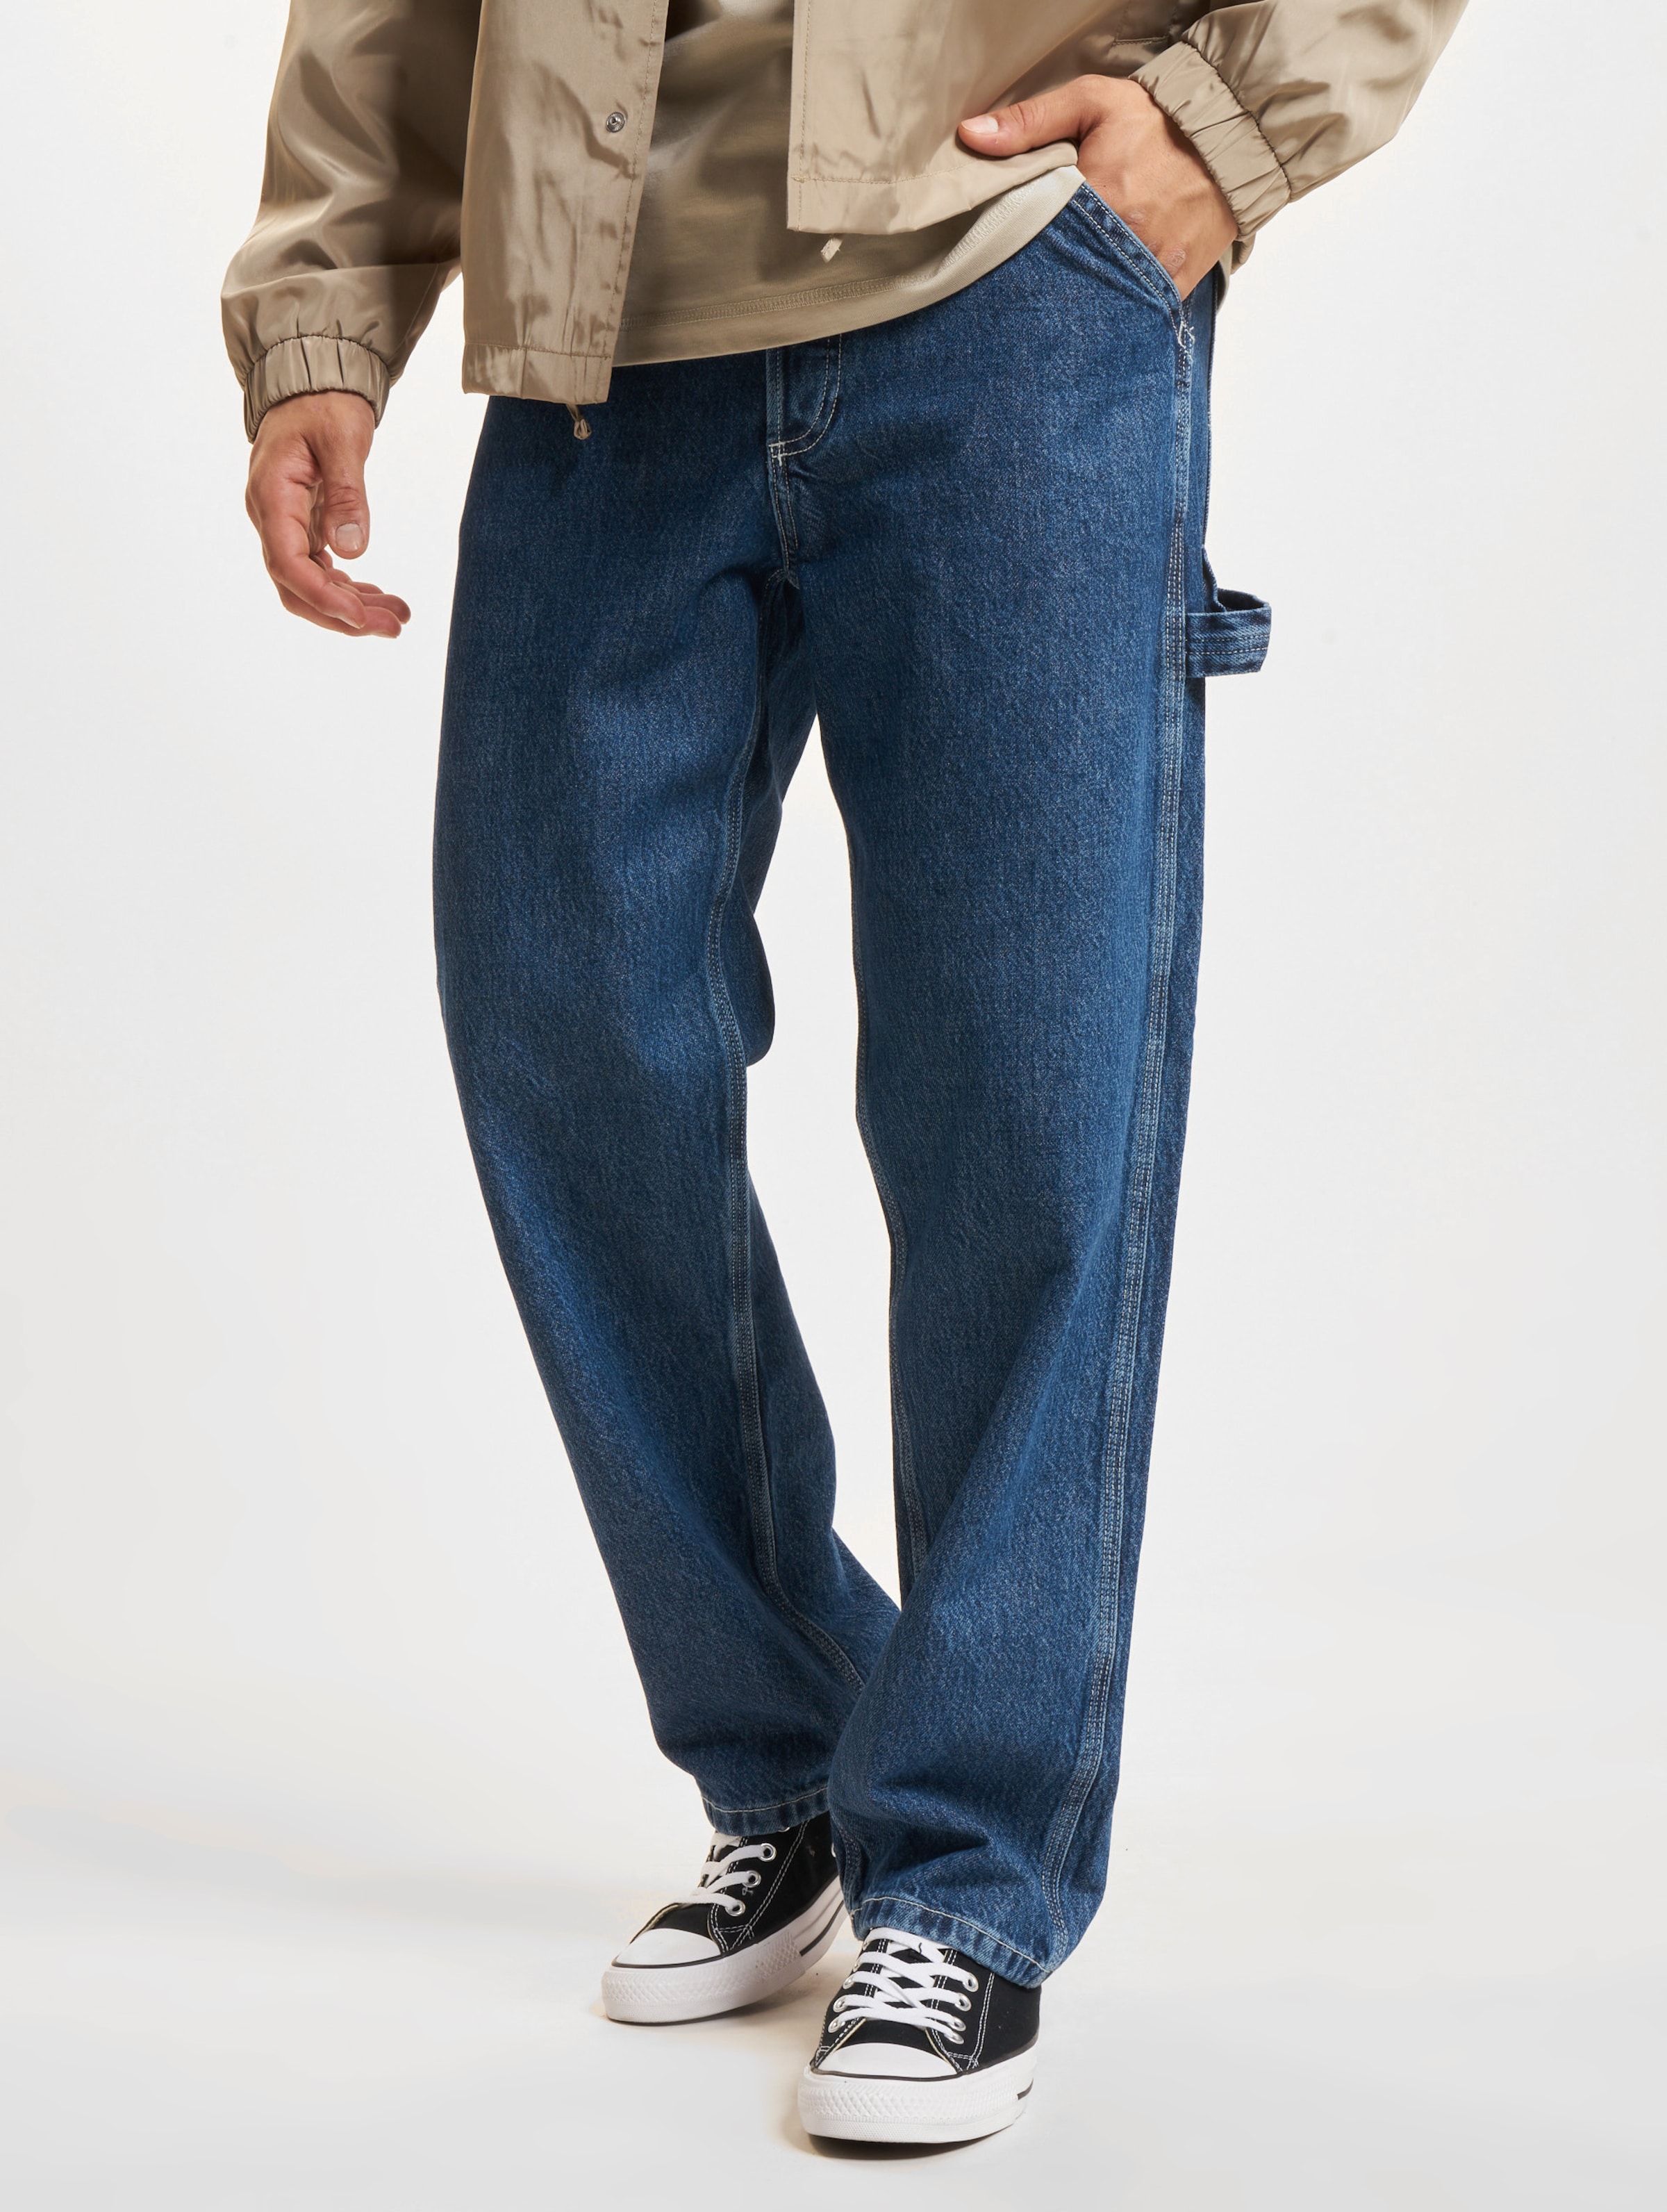 Jack & Jones Eddie Carpenter SBD 316 Loose Fit Jeans Mannen op kleur blauw, Maat 3034